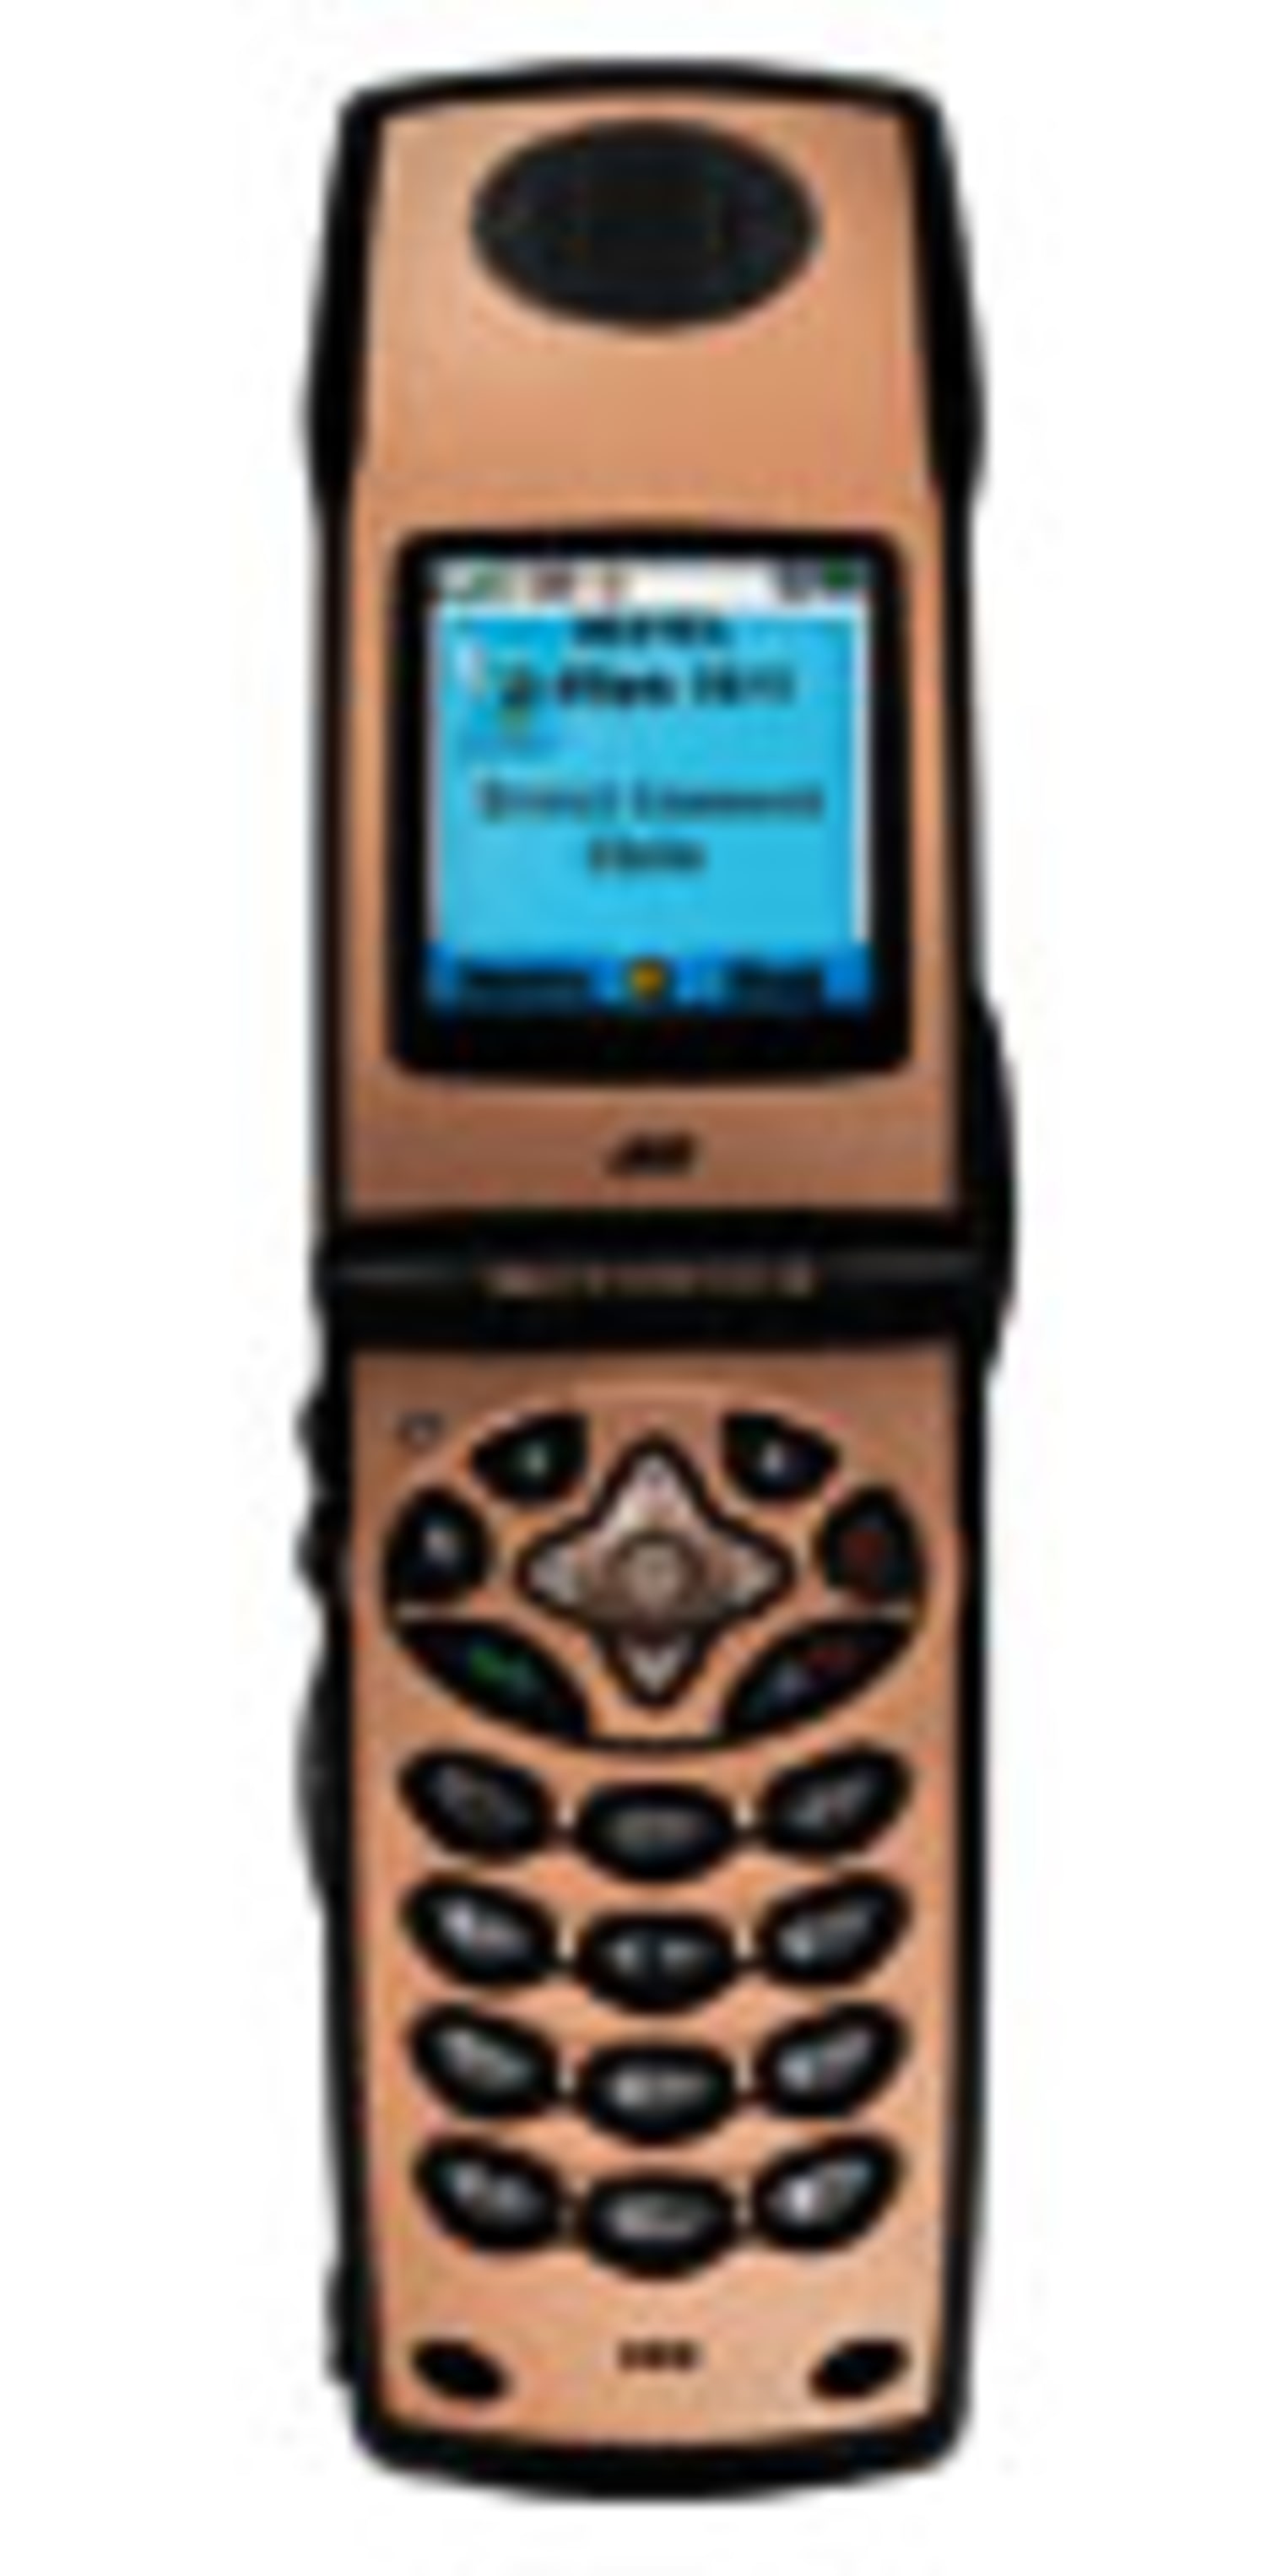 Nextel Phone Model